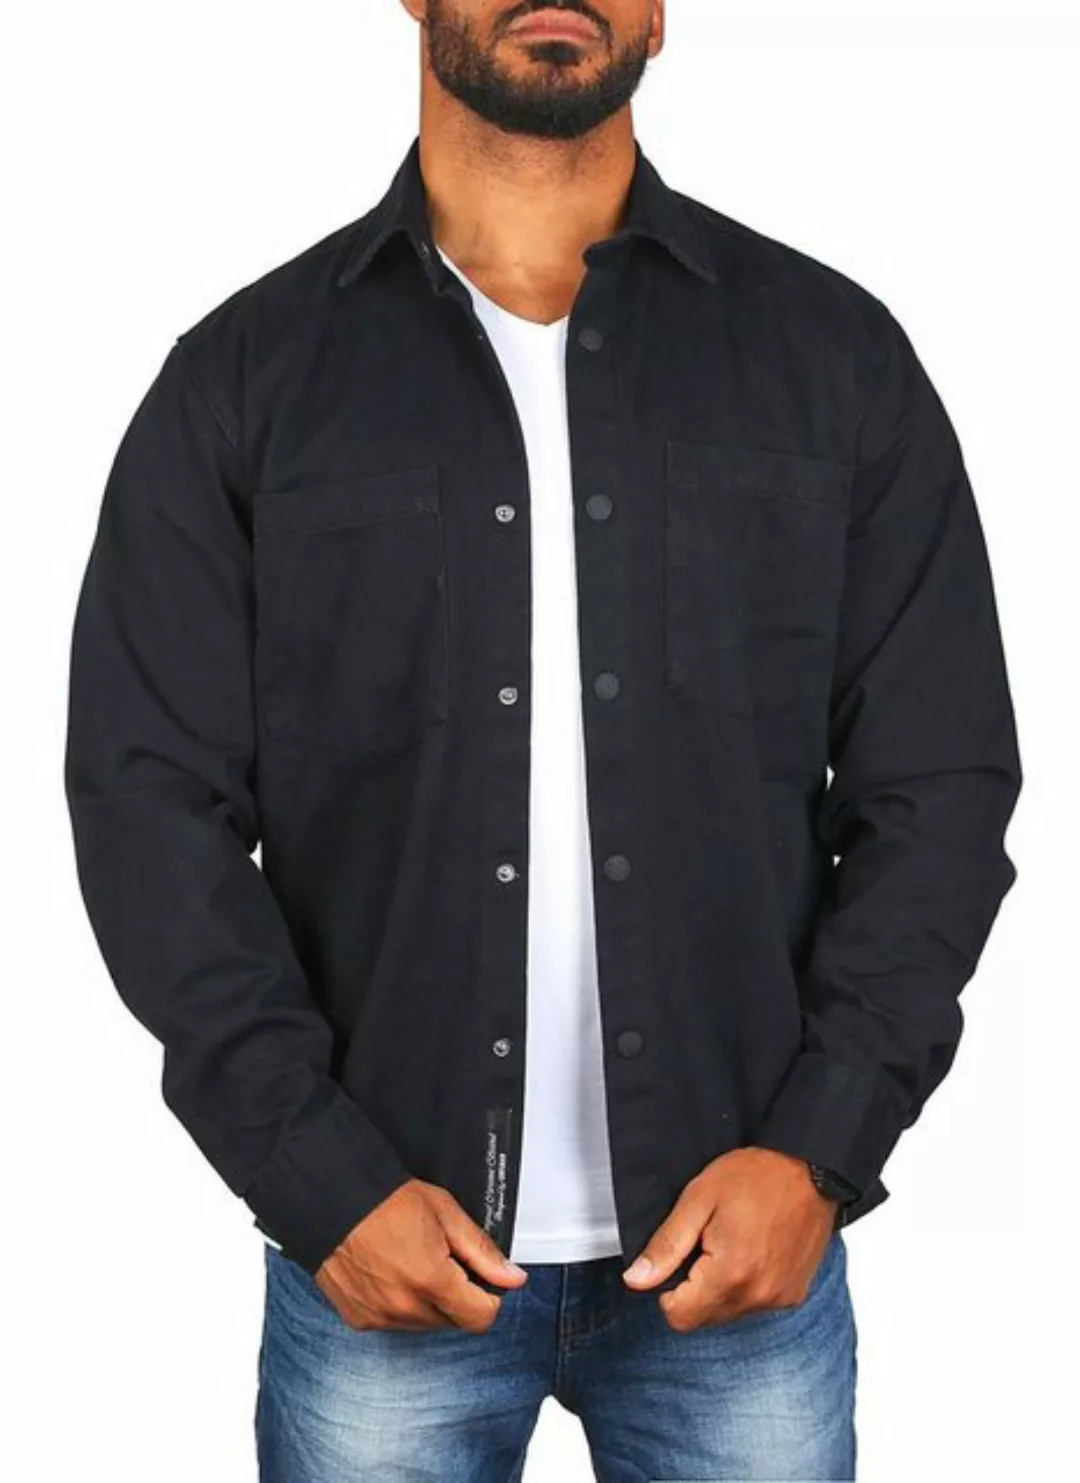 CARISMA Langarmhemd Herren Hemd Jacke robuste jeansartige Qualität retro Sa günstig online kaufen